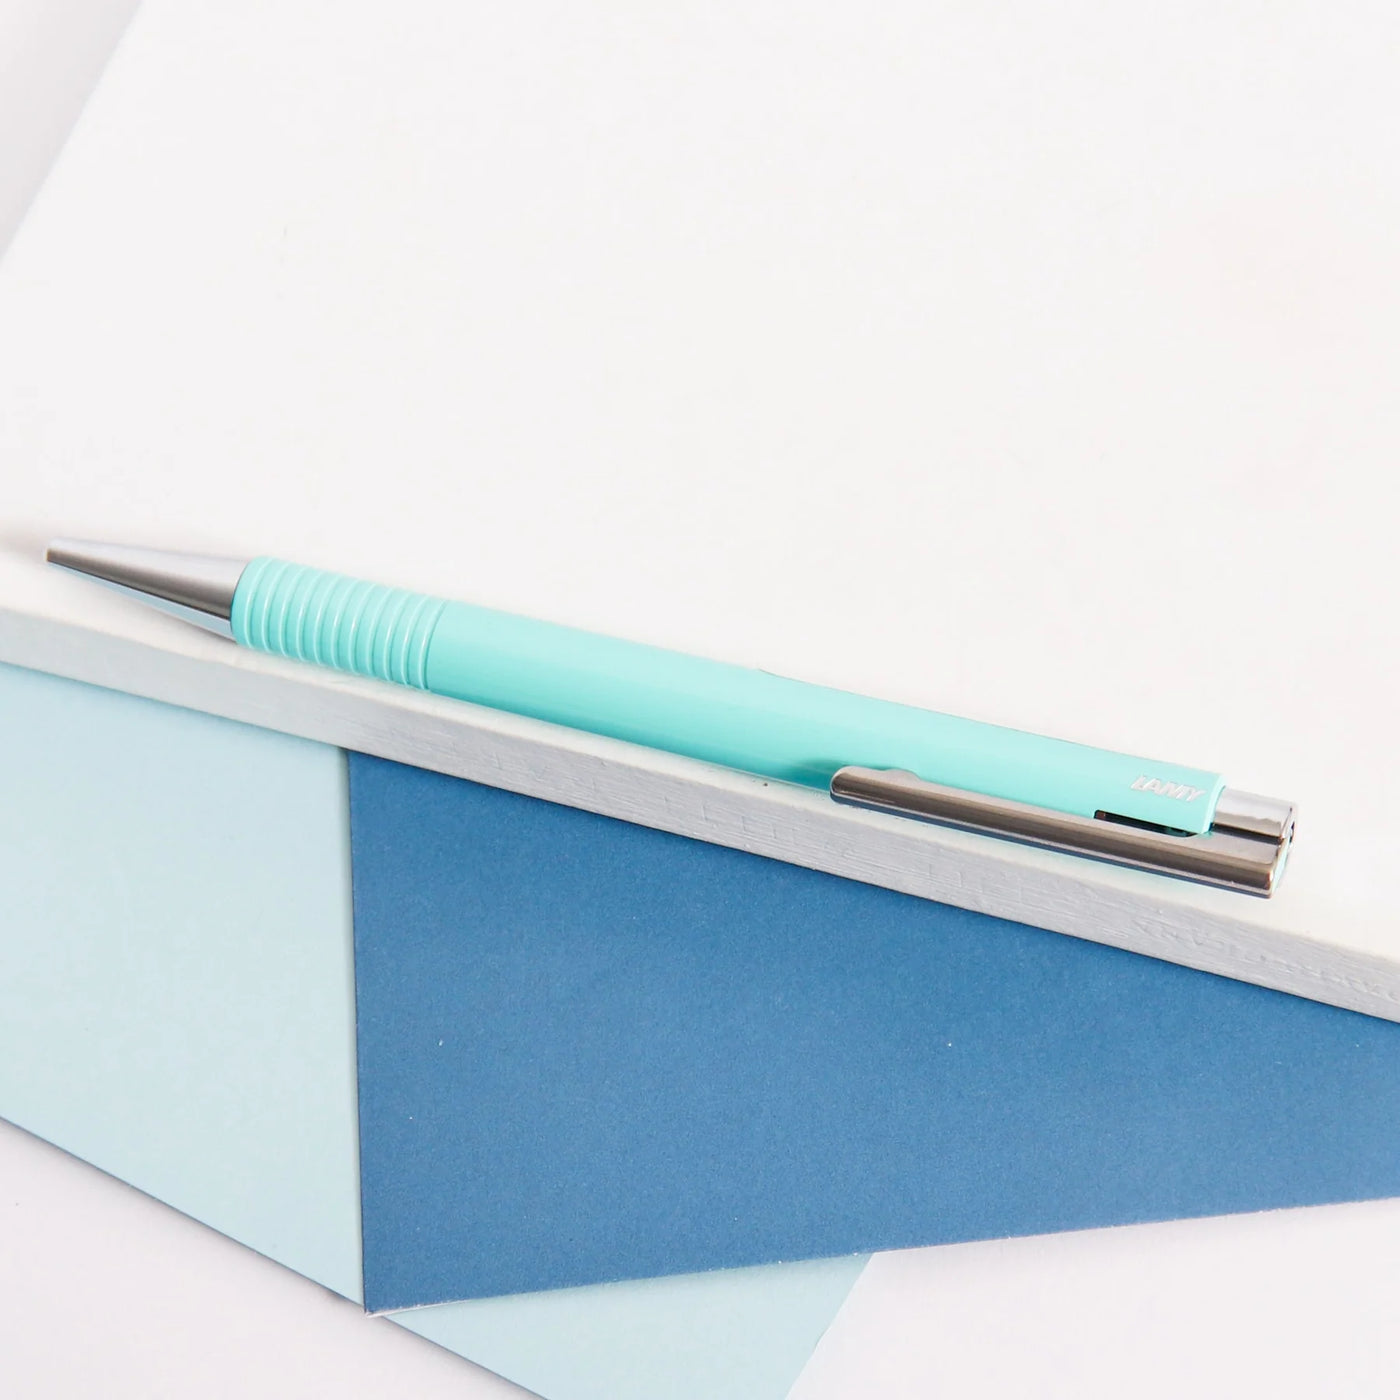 My Favorite Pens for Planners - Ballpoint, Gel, Brush Pens & More 